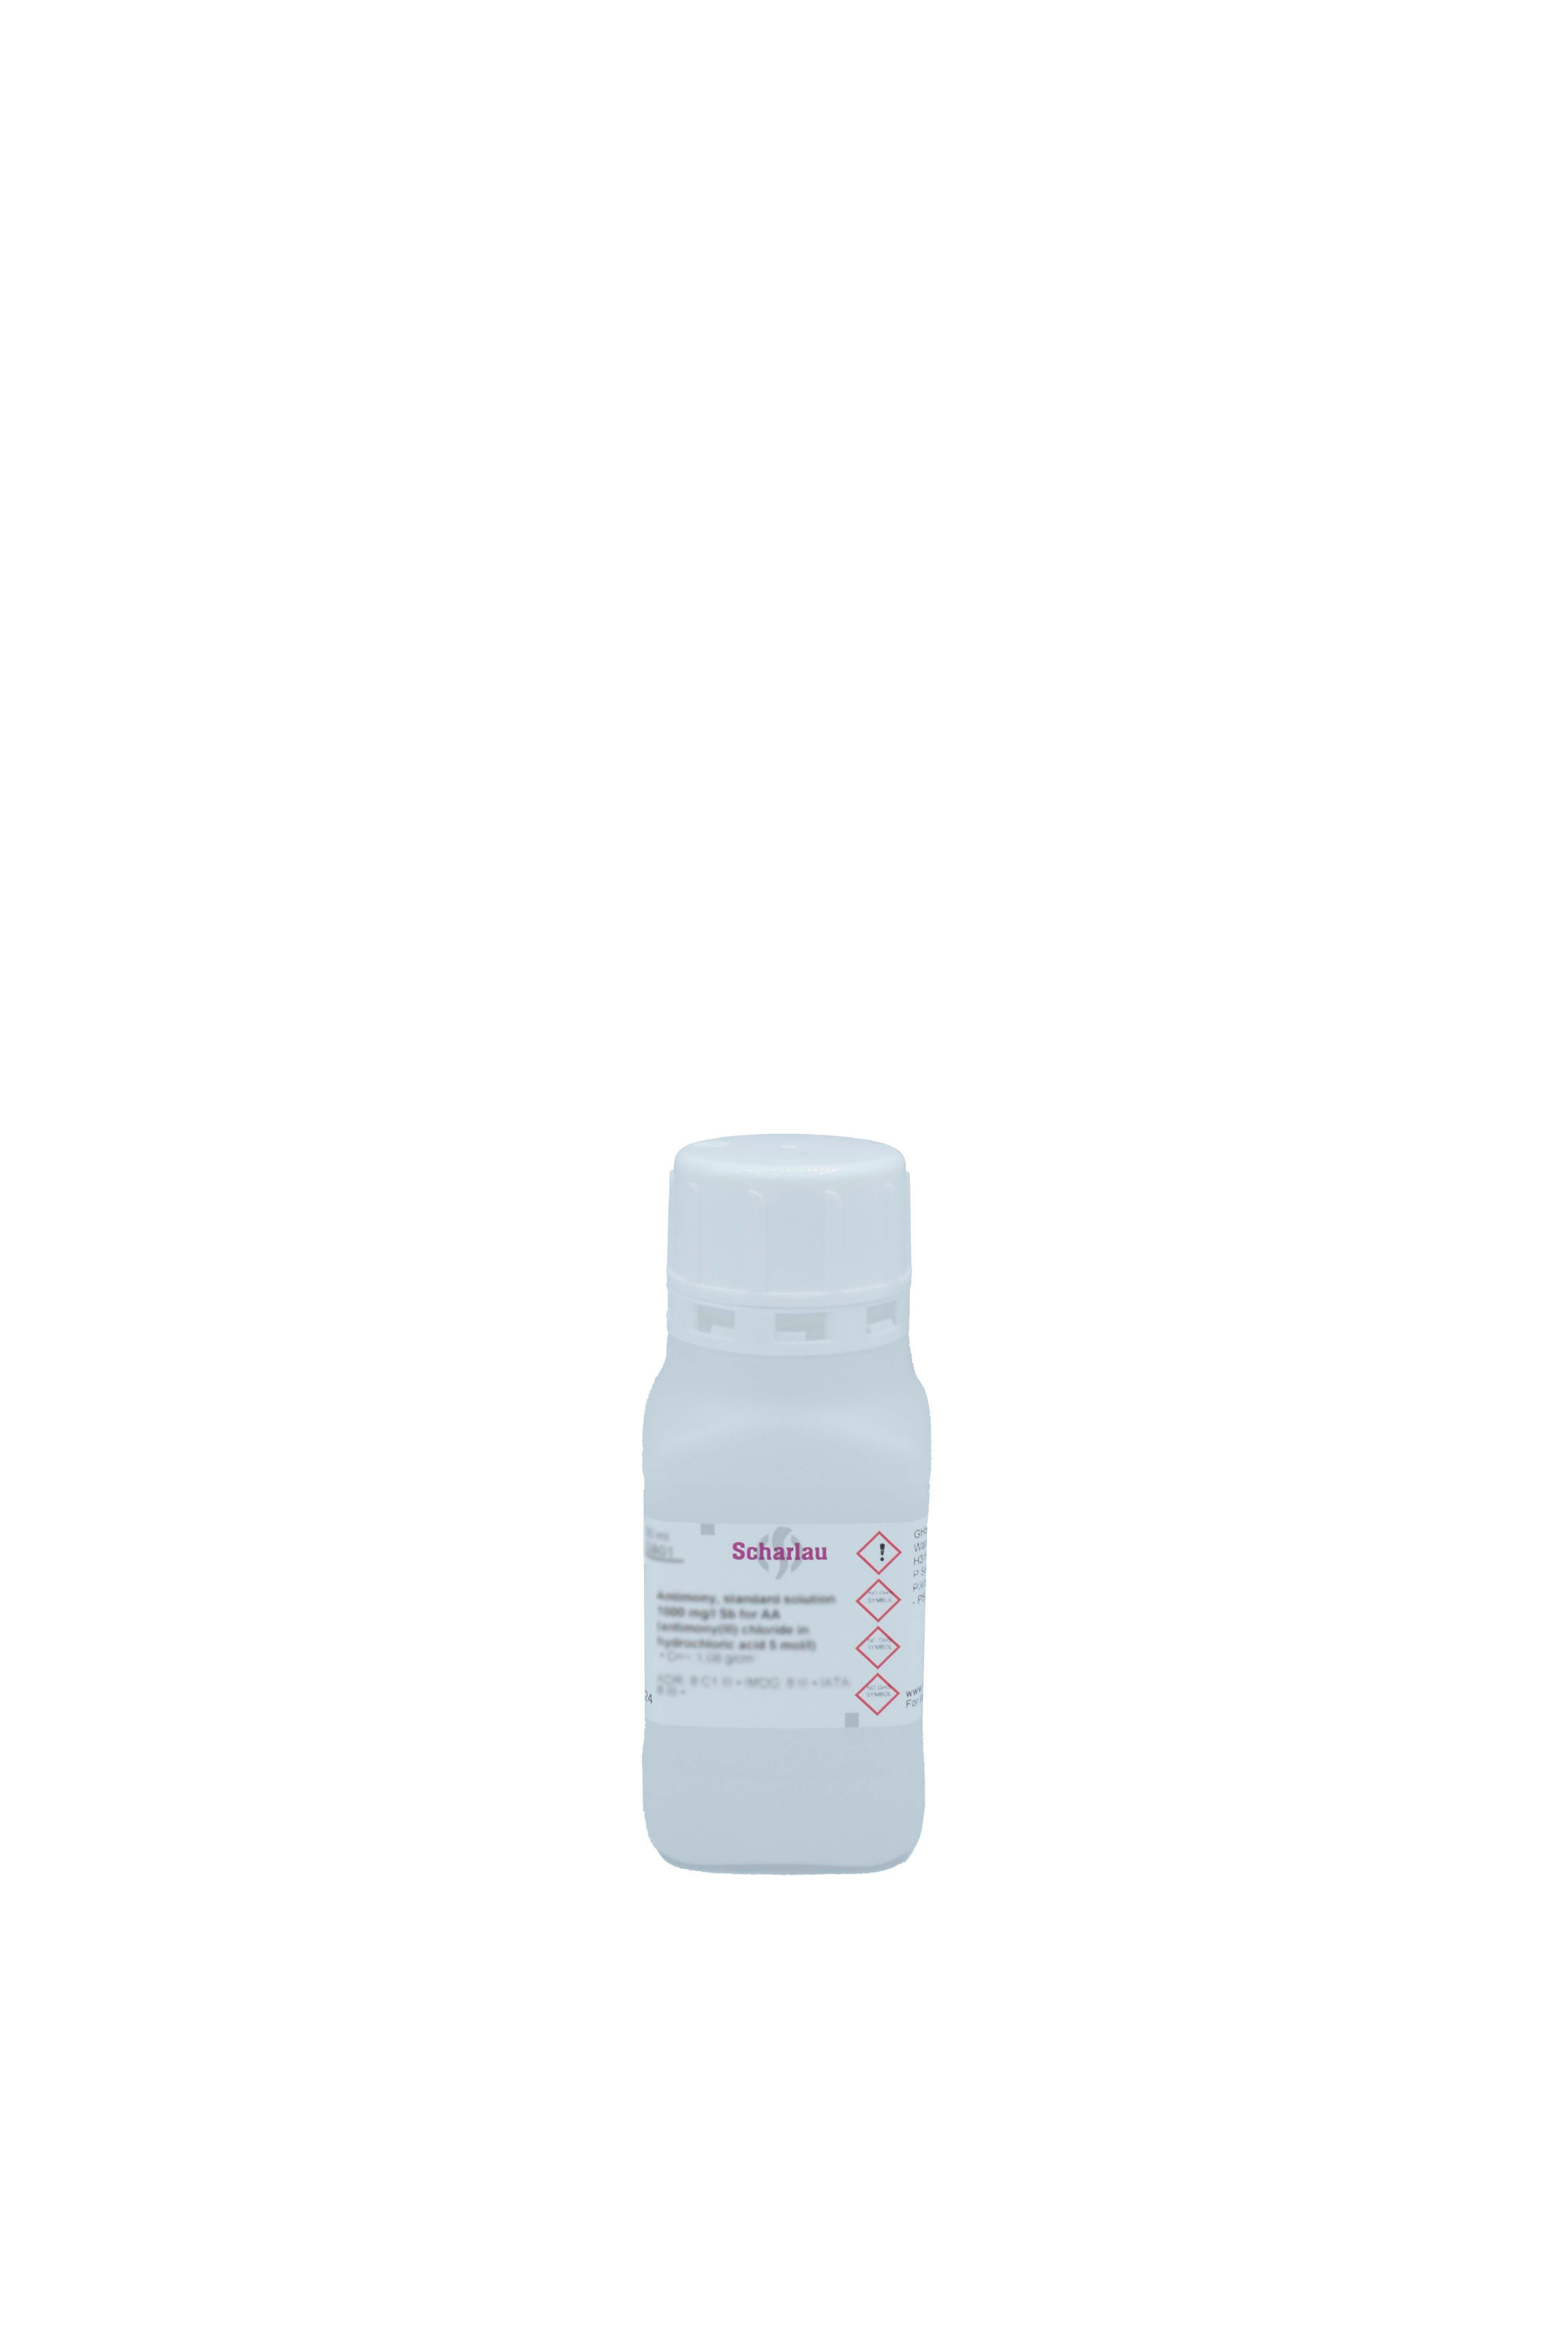 Molibdeno, solución patrón 1000 mg/l Mo para AAs (amonio heptamolibdato en agua)